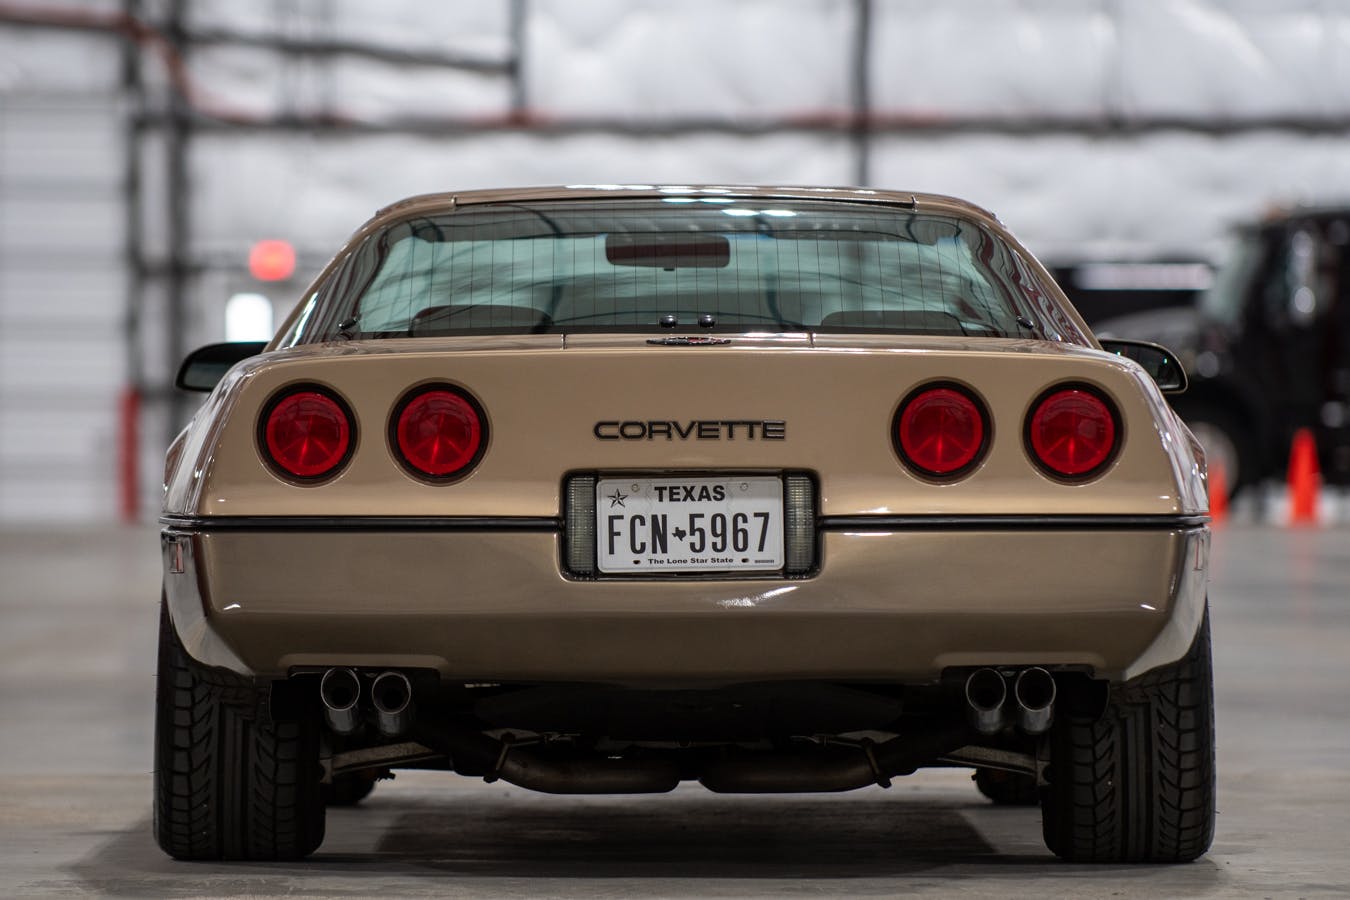 C4 Corvette rear